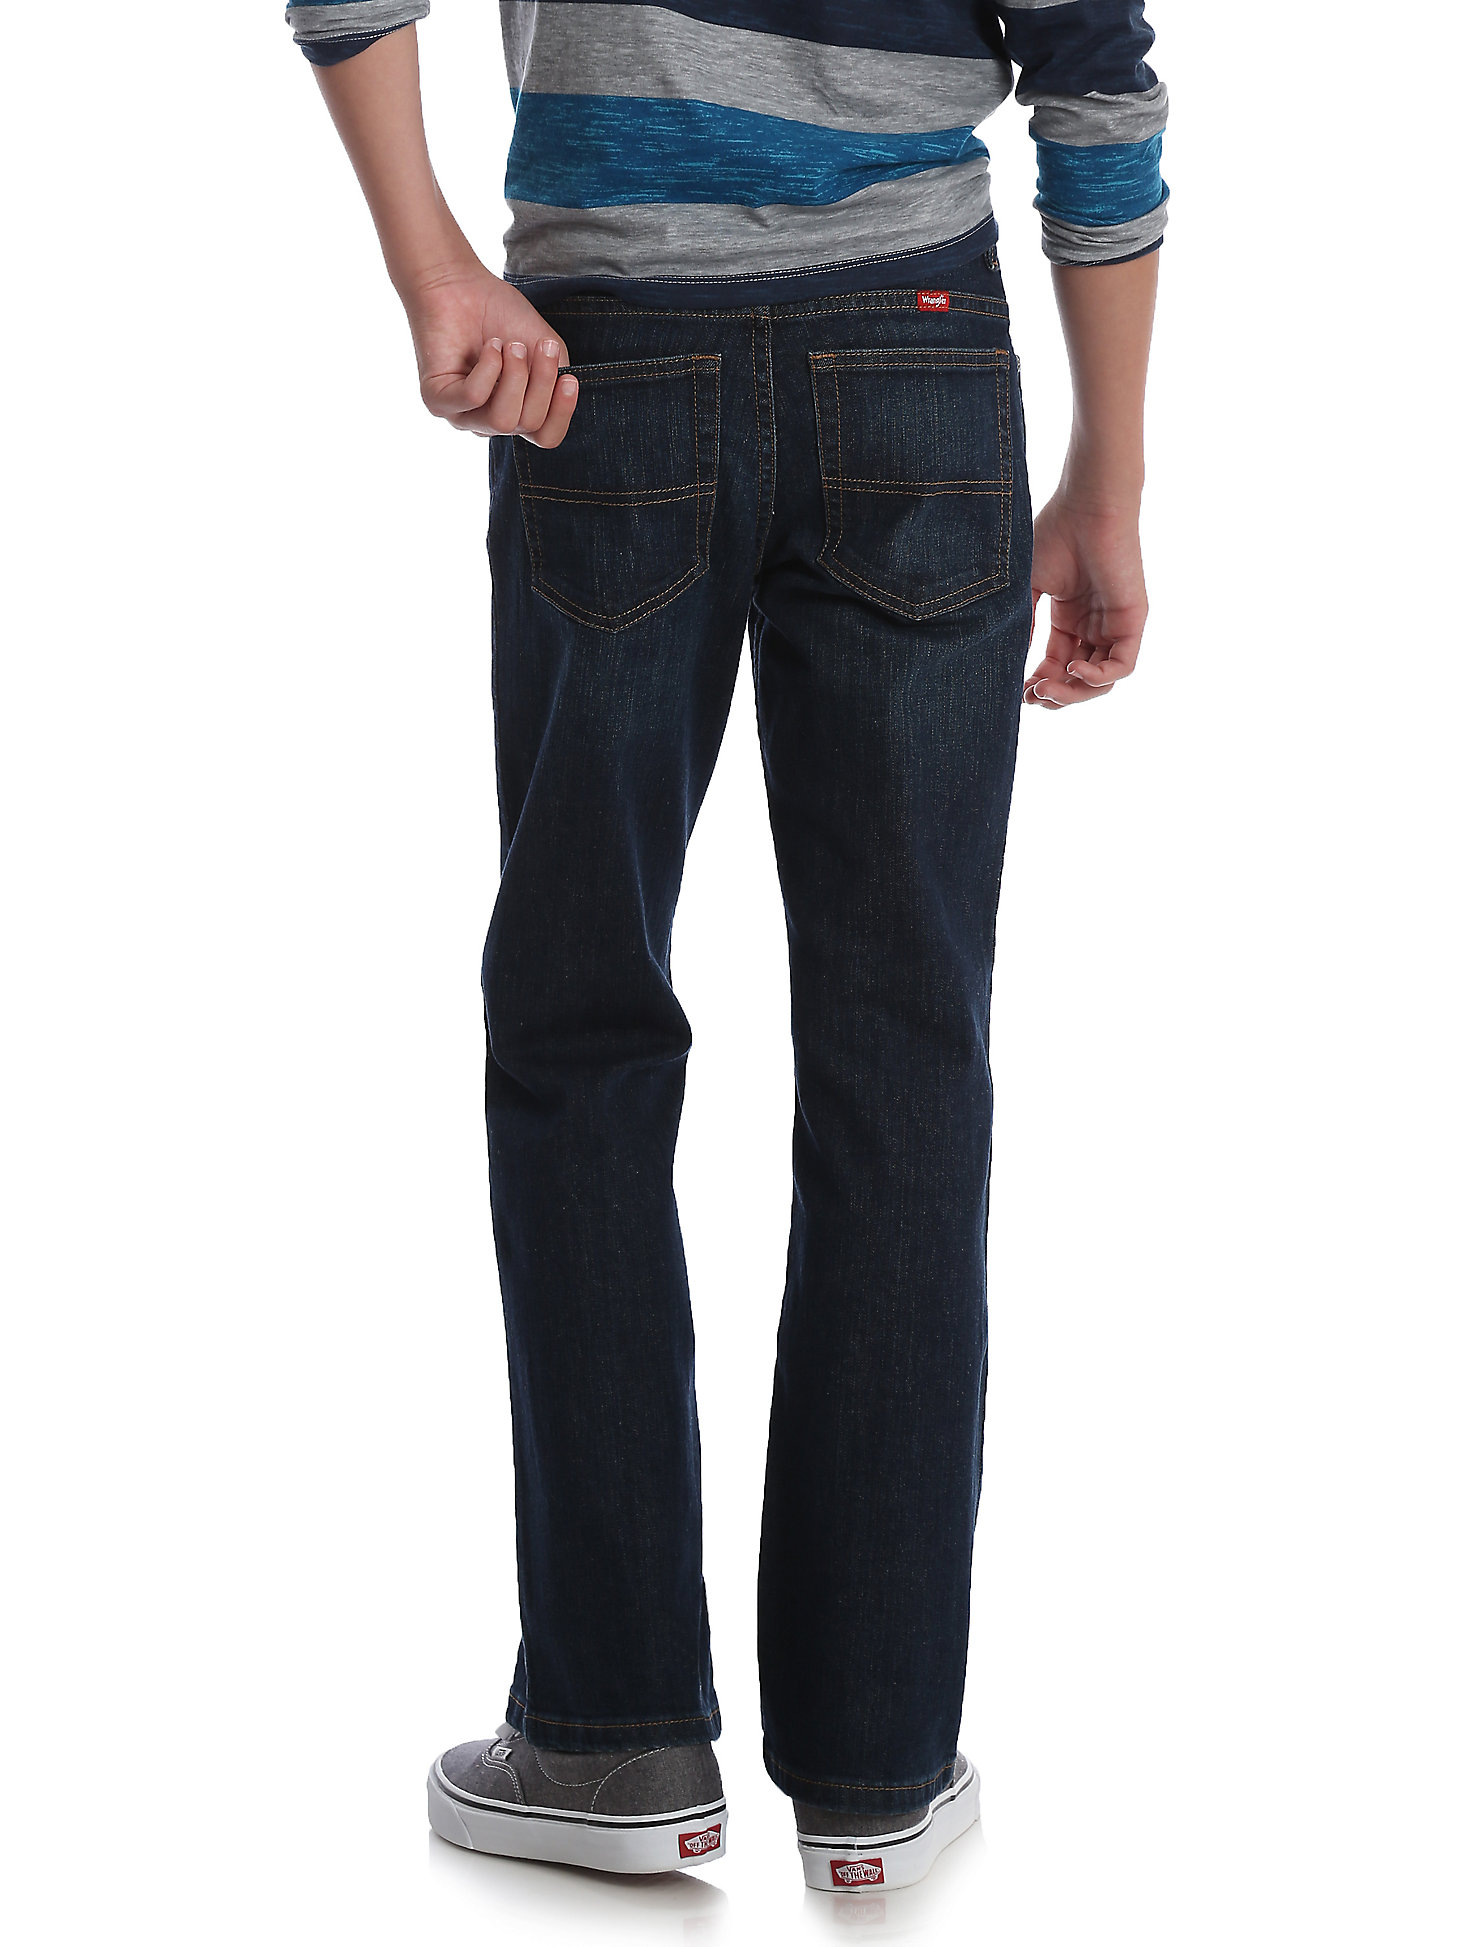 Blue Royal, Size 16 Regular Wrangler Boys Performance Jeans wih Adjustable Waist